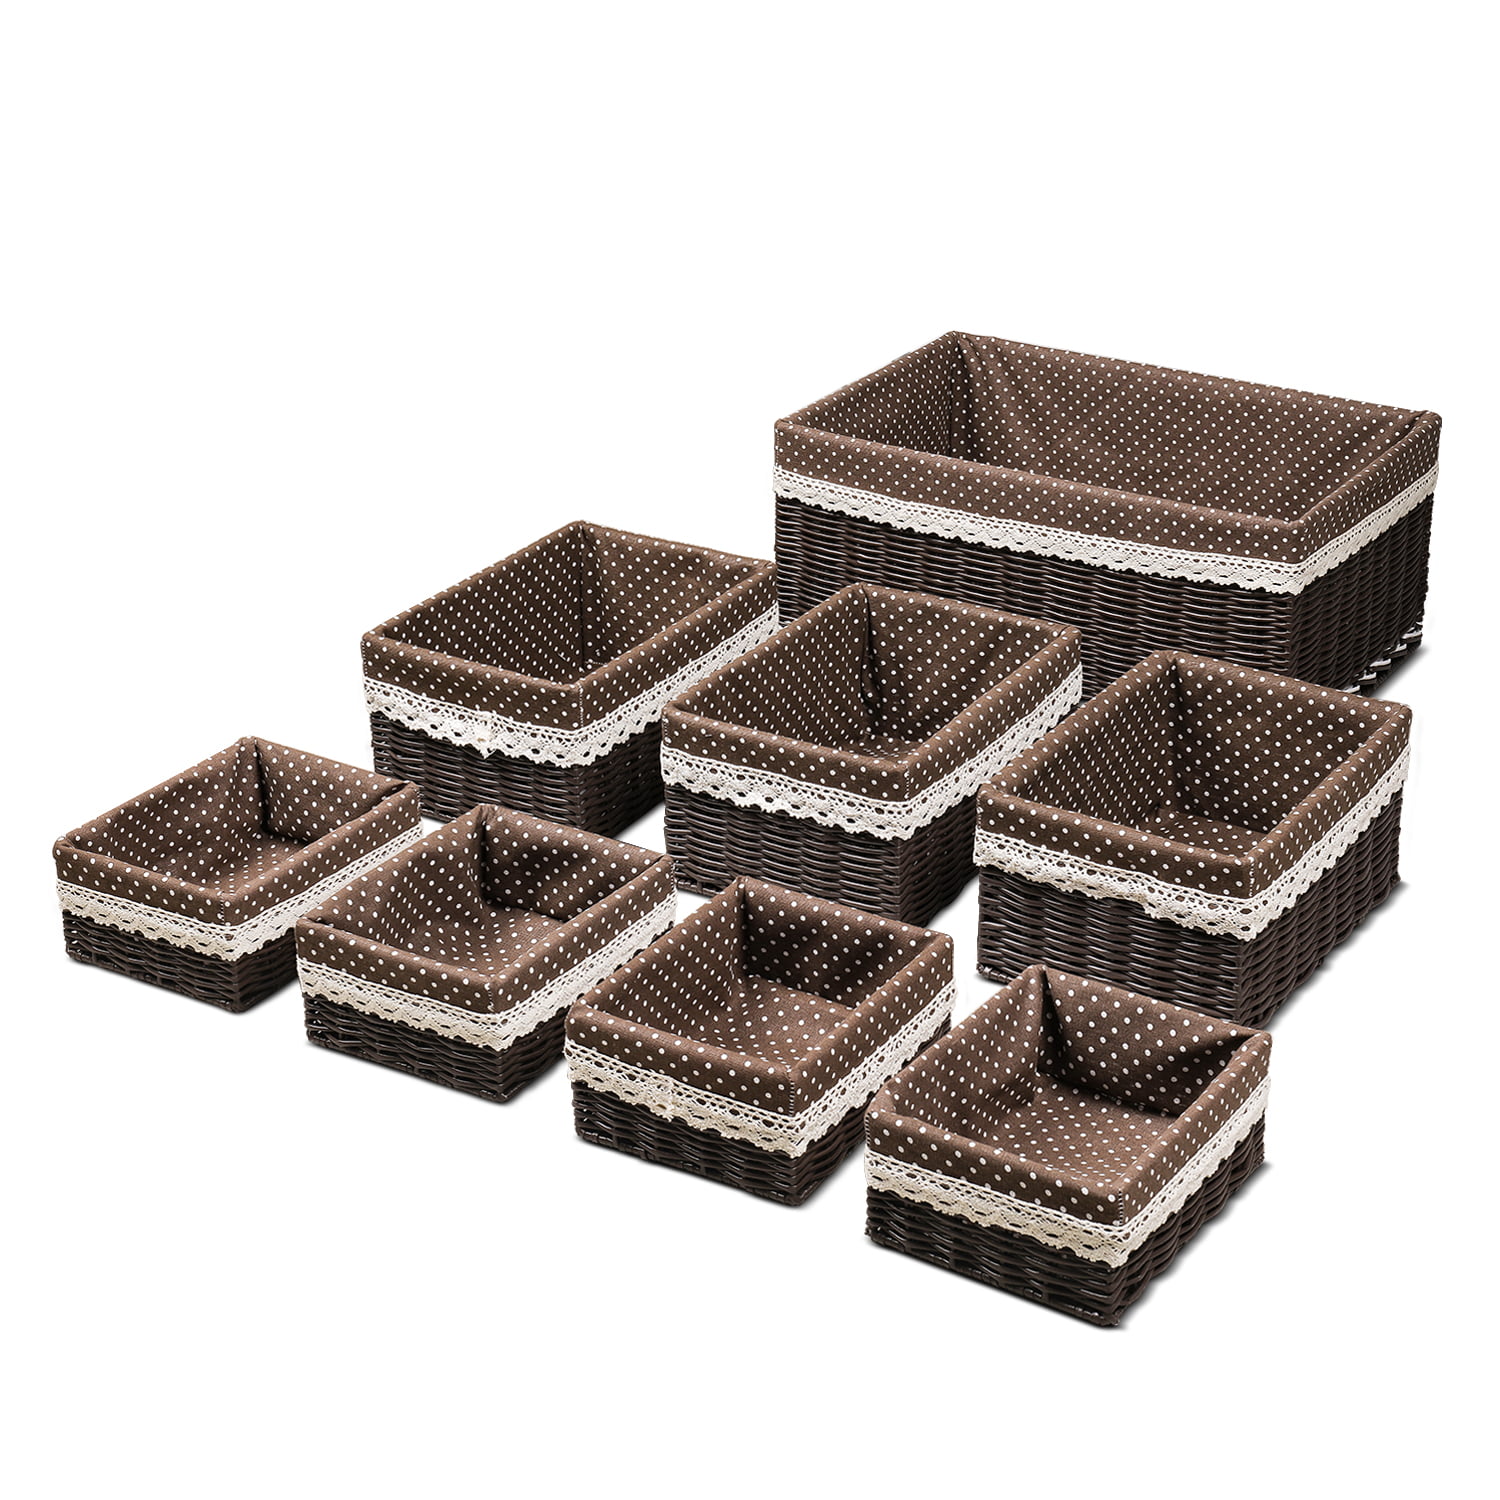 Storage Baskets Woven With Liner, Bathroom Wicker Storage Baskets Small